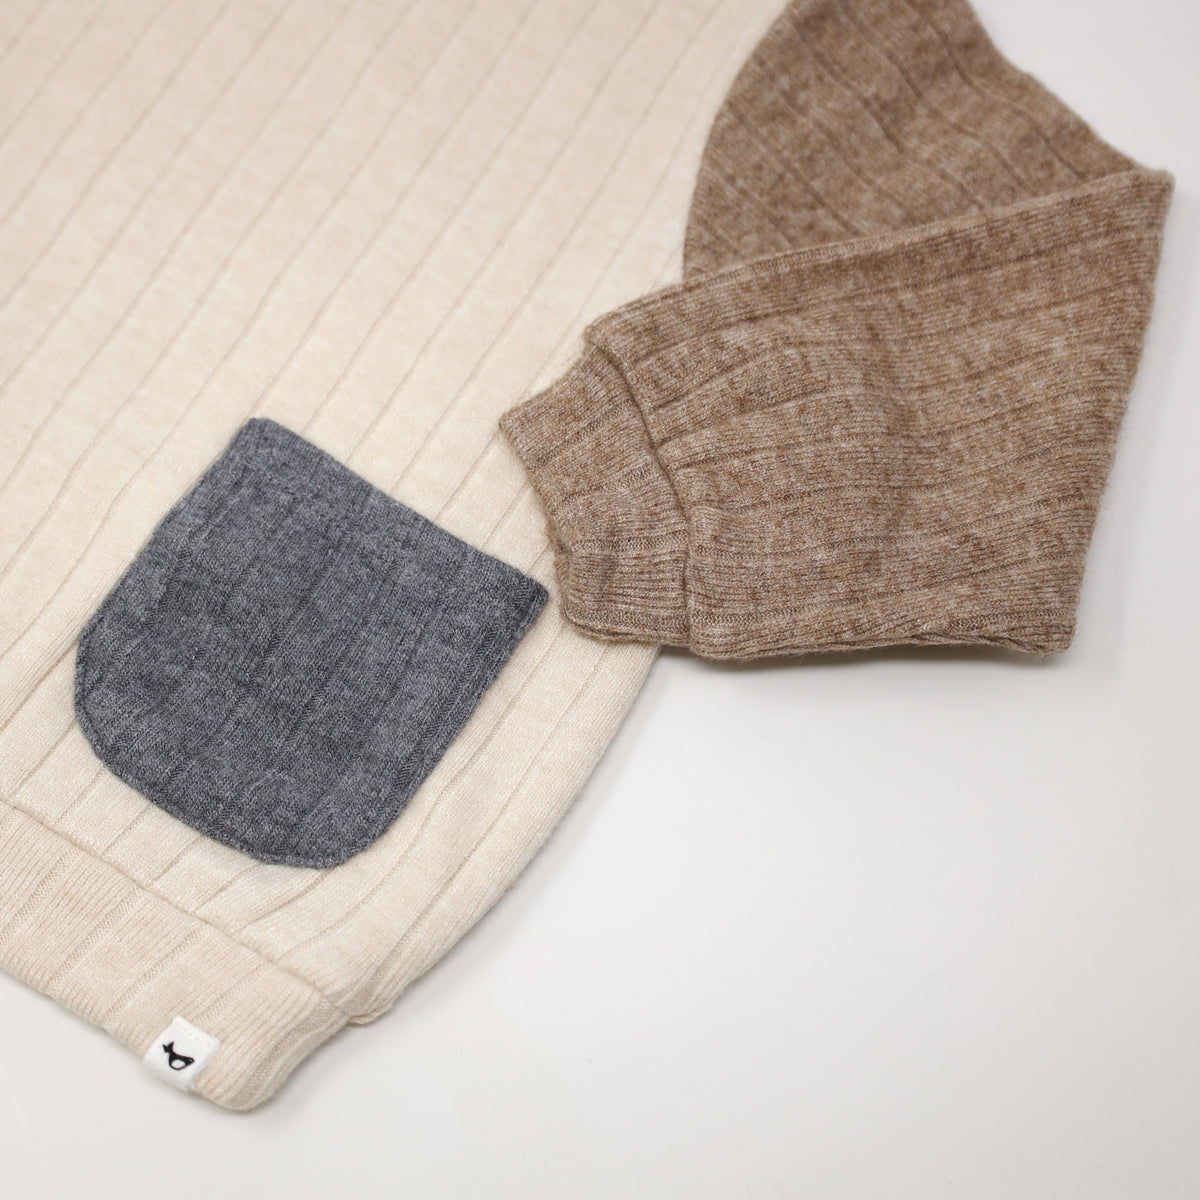 oh baby! Wide Rib Sweater Knit Boxy - Vanilla, Mushroom, Charcoal Combo